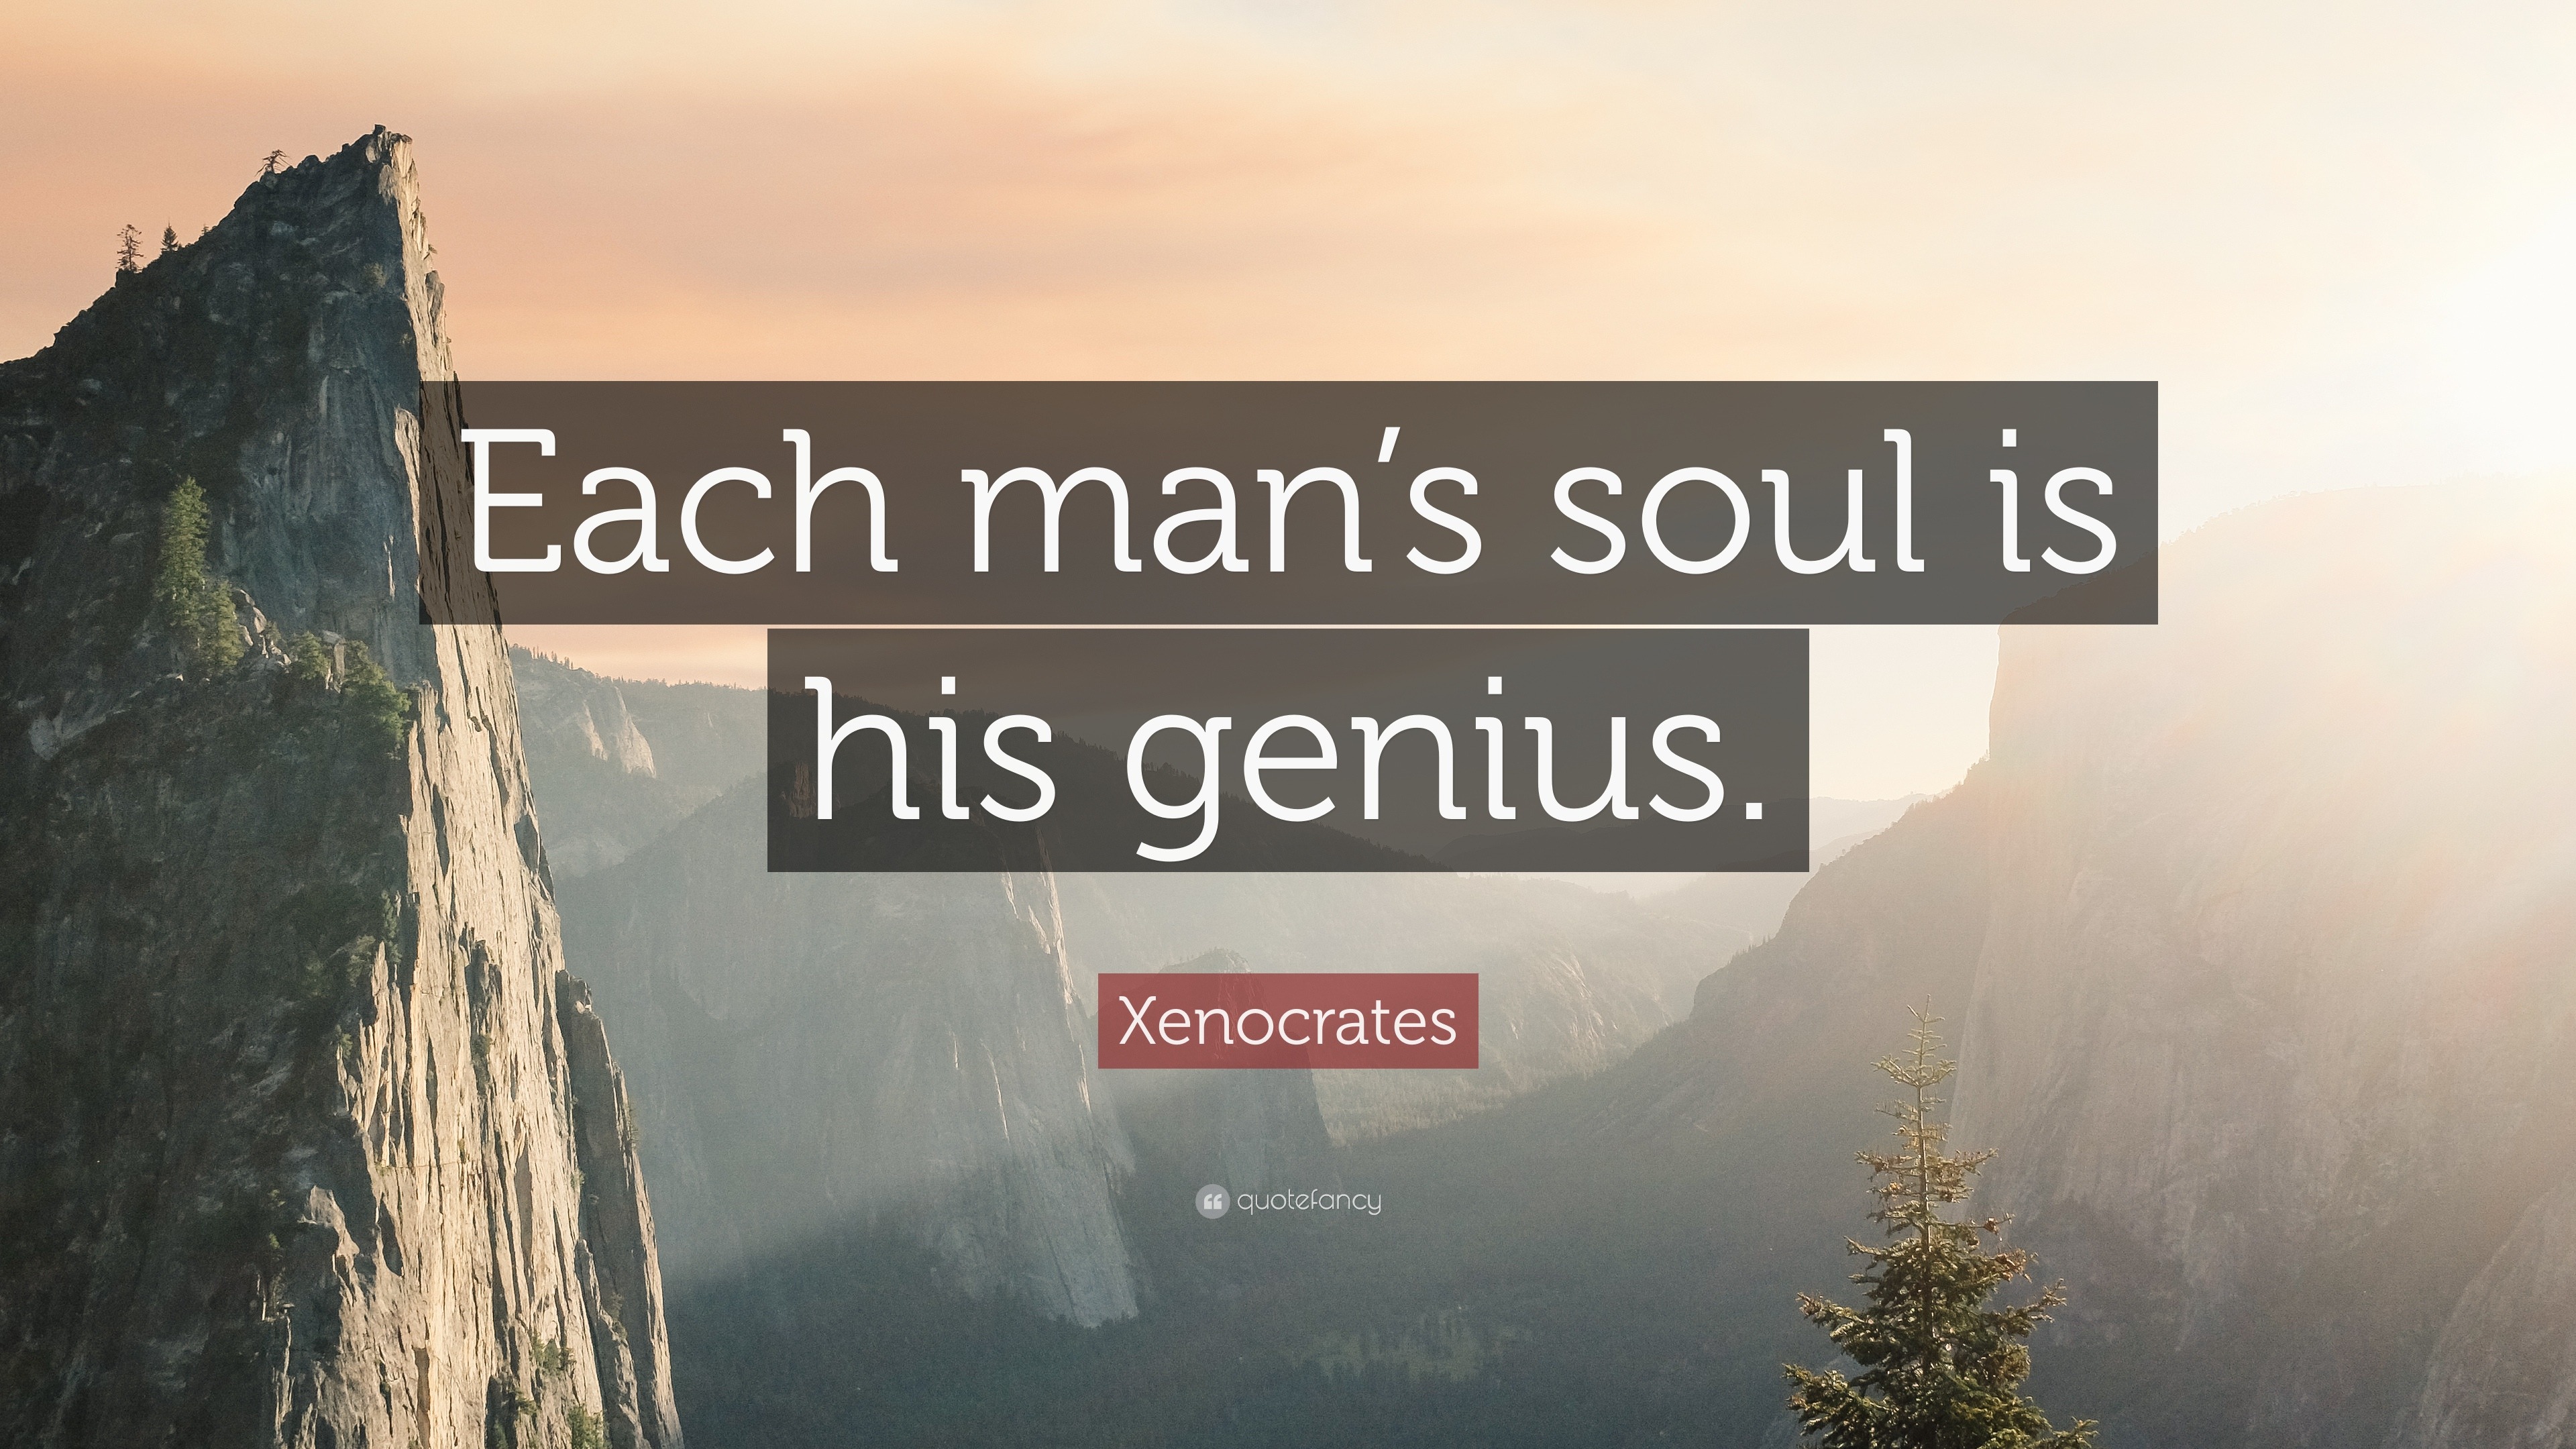 Xenocrates Quote: “Each man’s soul is his genius.”